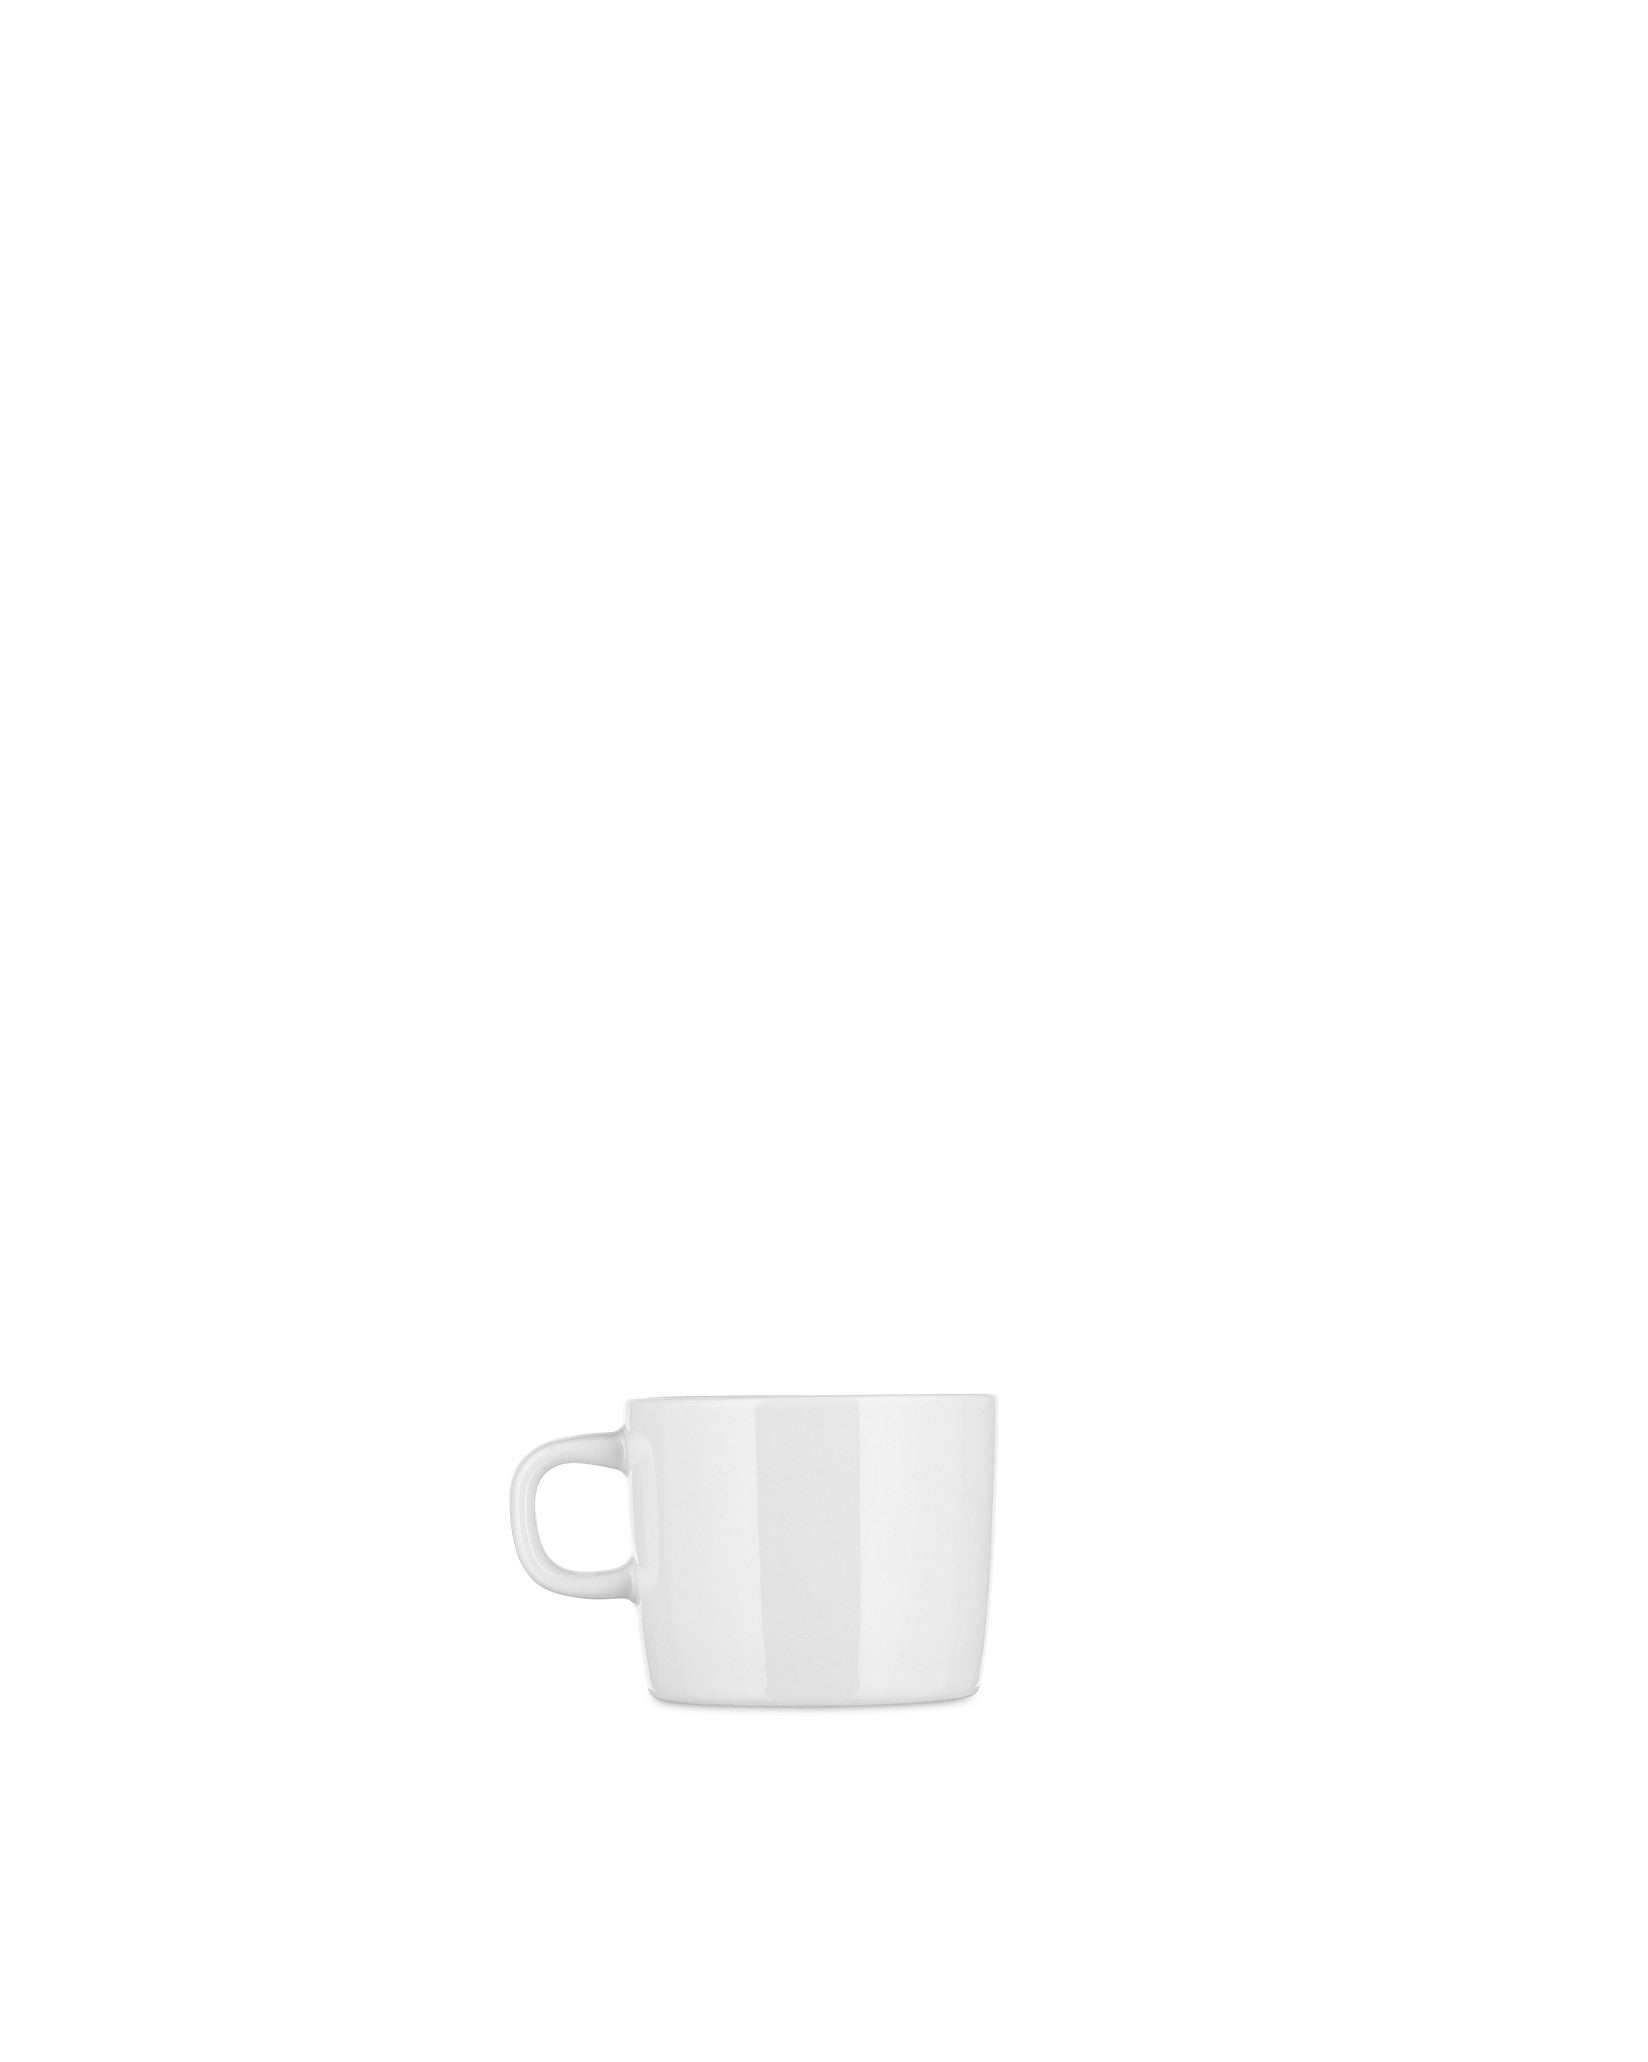 Alessi New 3 PlateBowlCup White Mocha Espresso Cups by Jasper Morrison for Alessi 